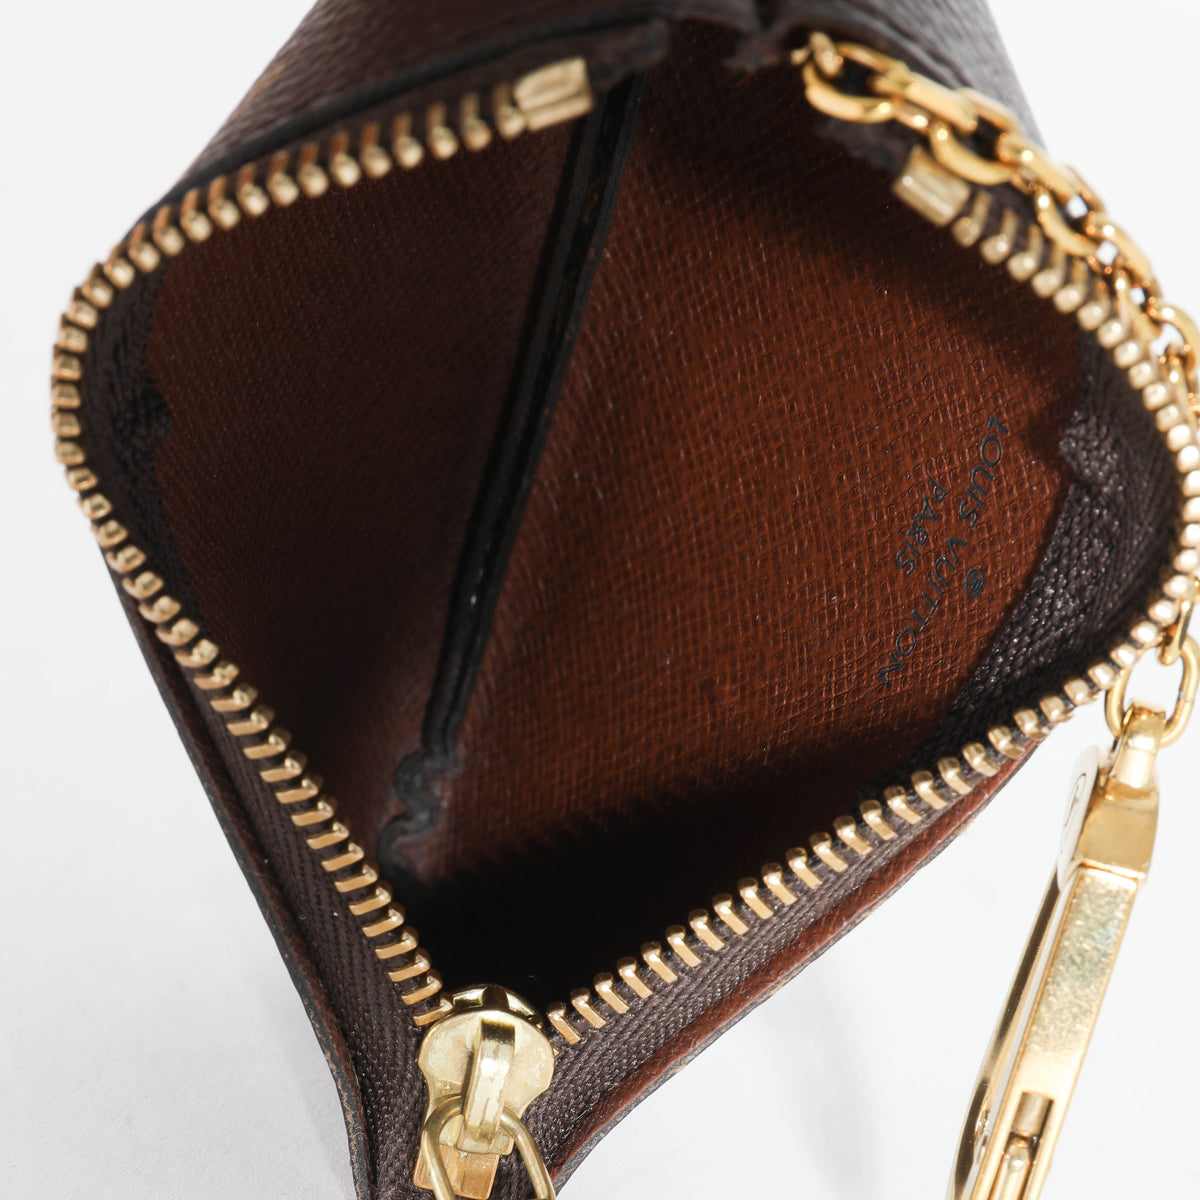 Louis Vuitton Takashi Murakami Key Pouch in Cerises Print – Luxmary Handbags